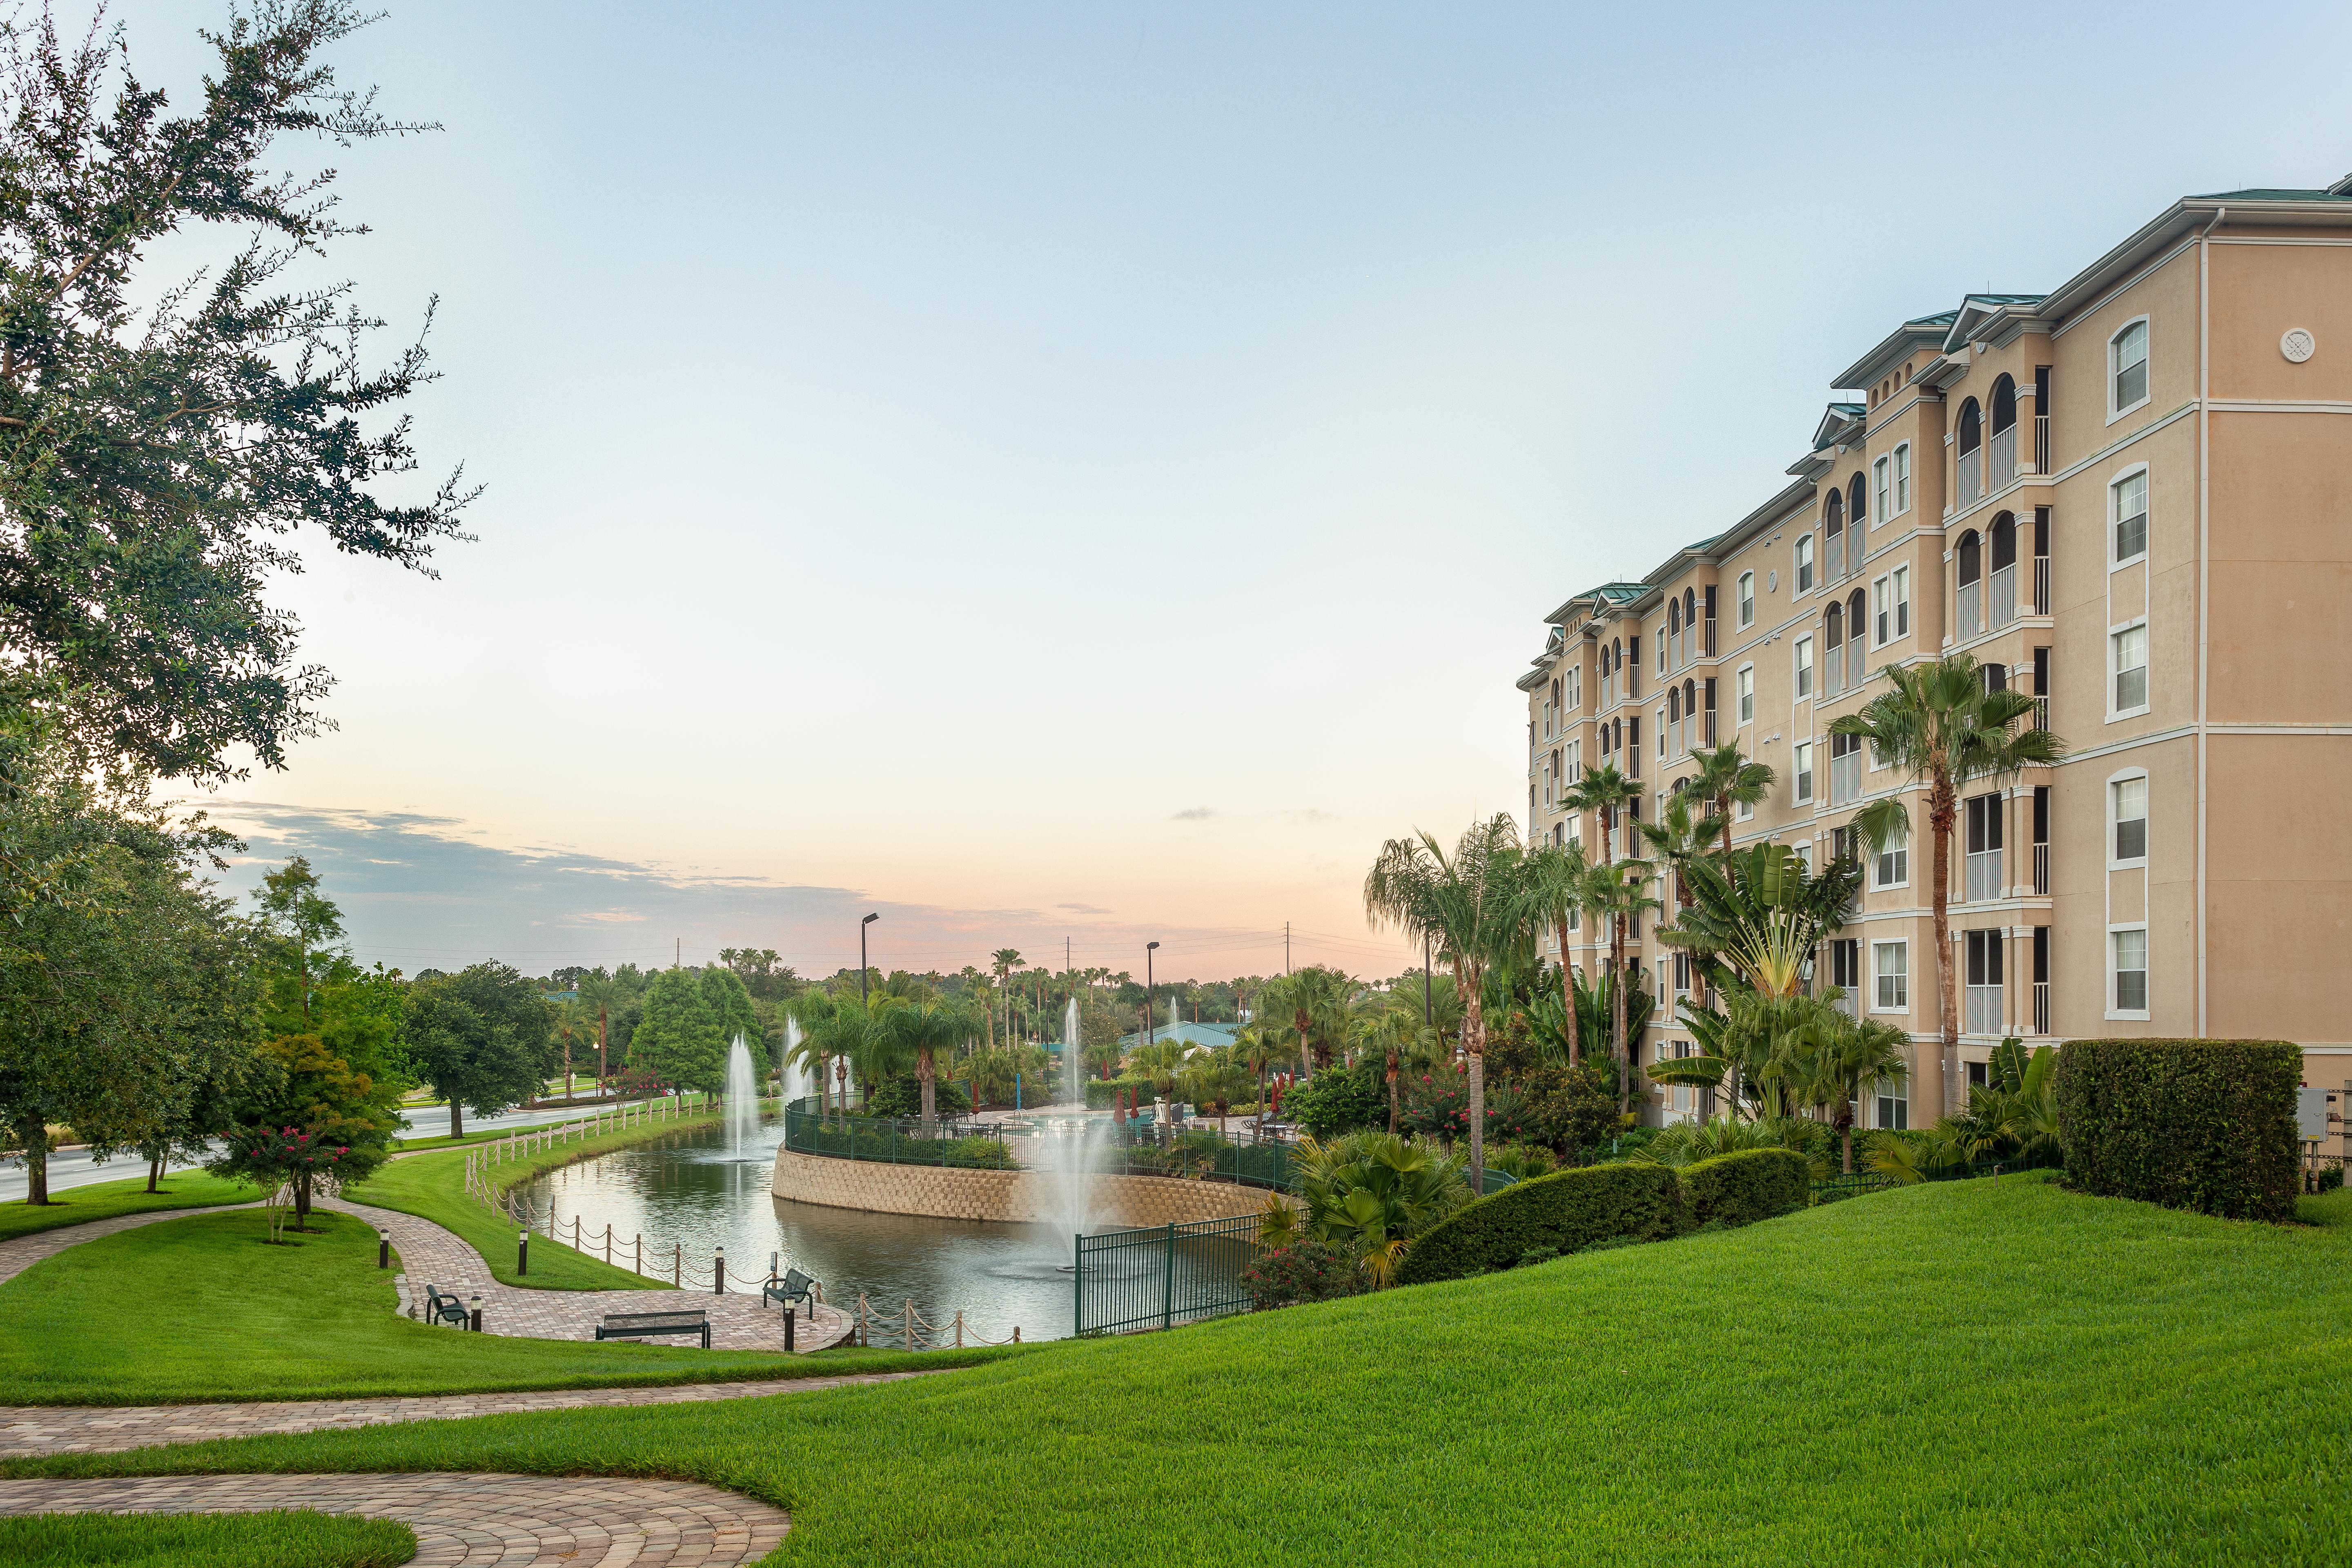 Hilton Vacation Club Mystic Dunes Orlando Exterior foto